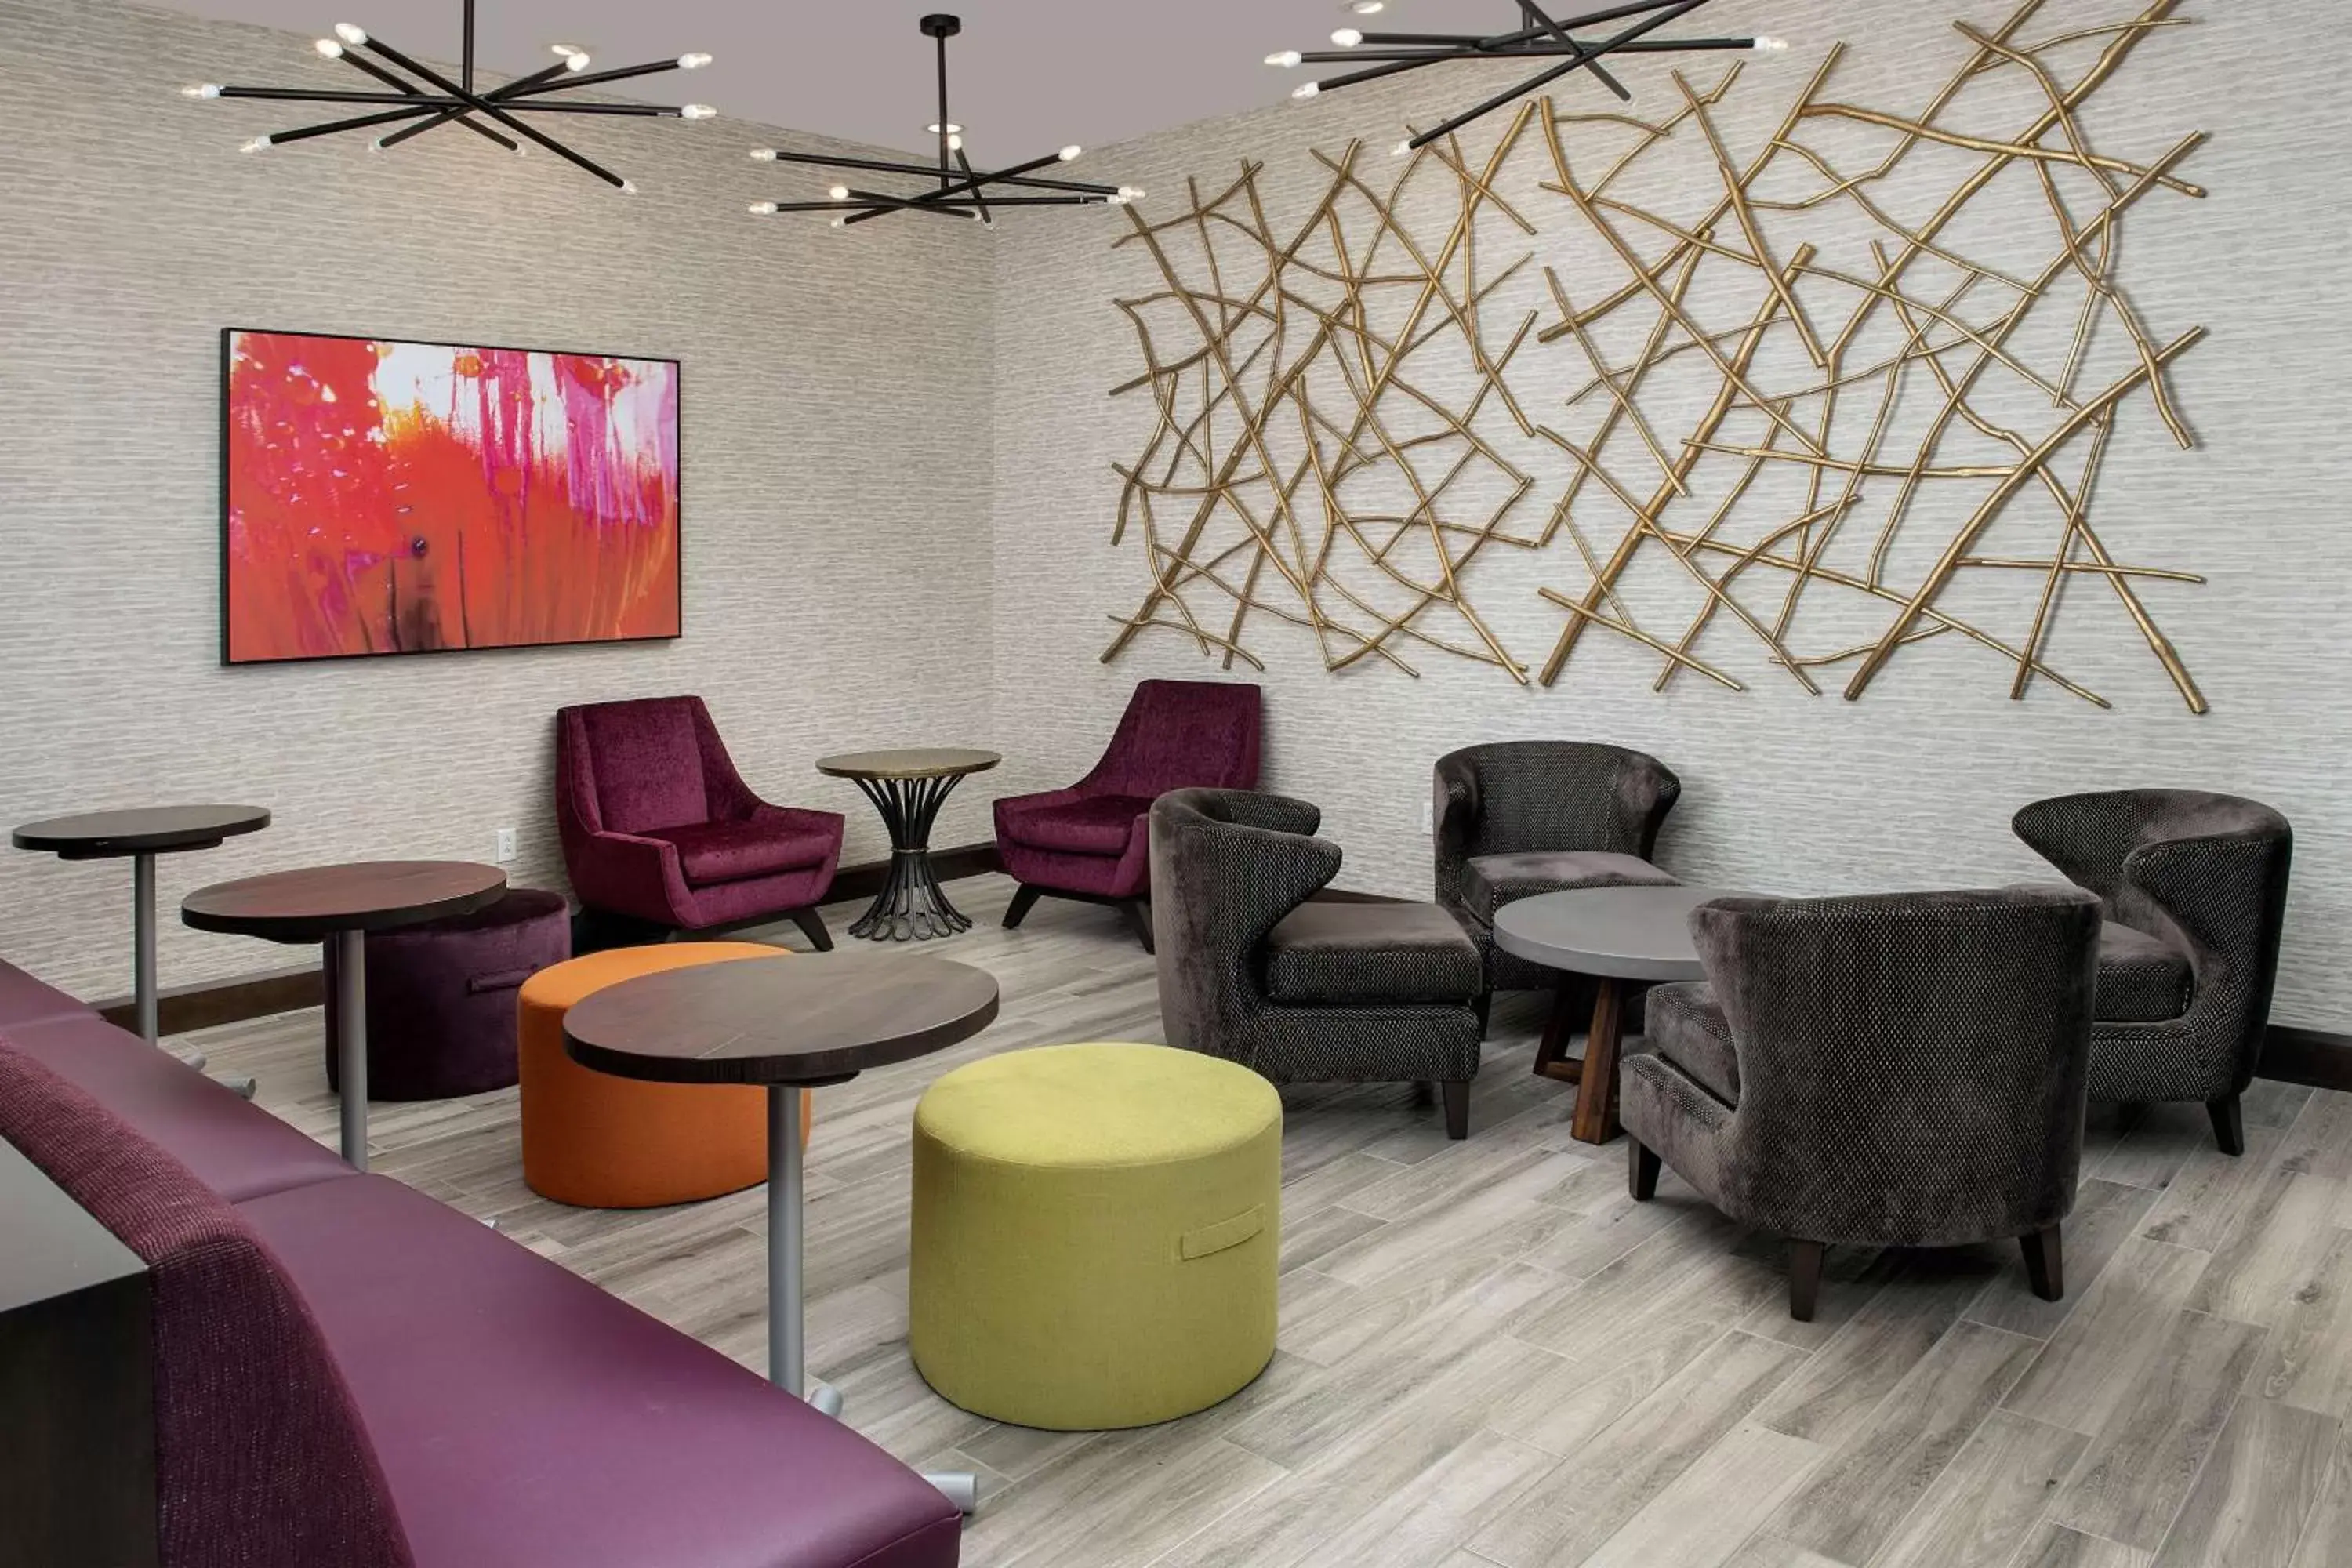 Lounge or bar, Lounge/Bar in Hilton Garden Inn Columbia Airport, SC